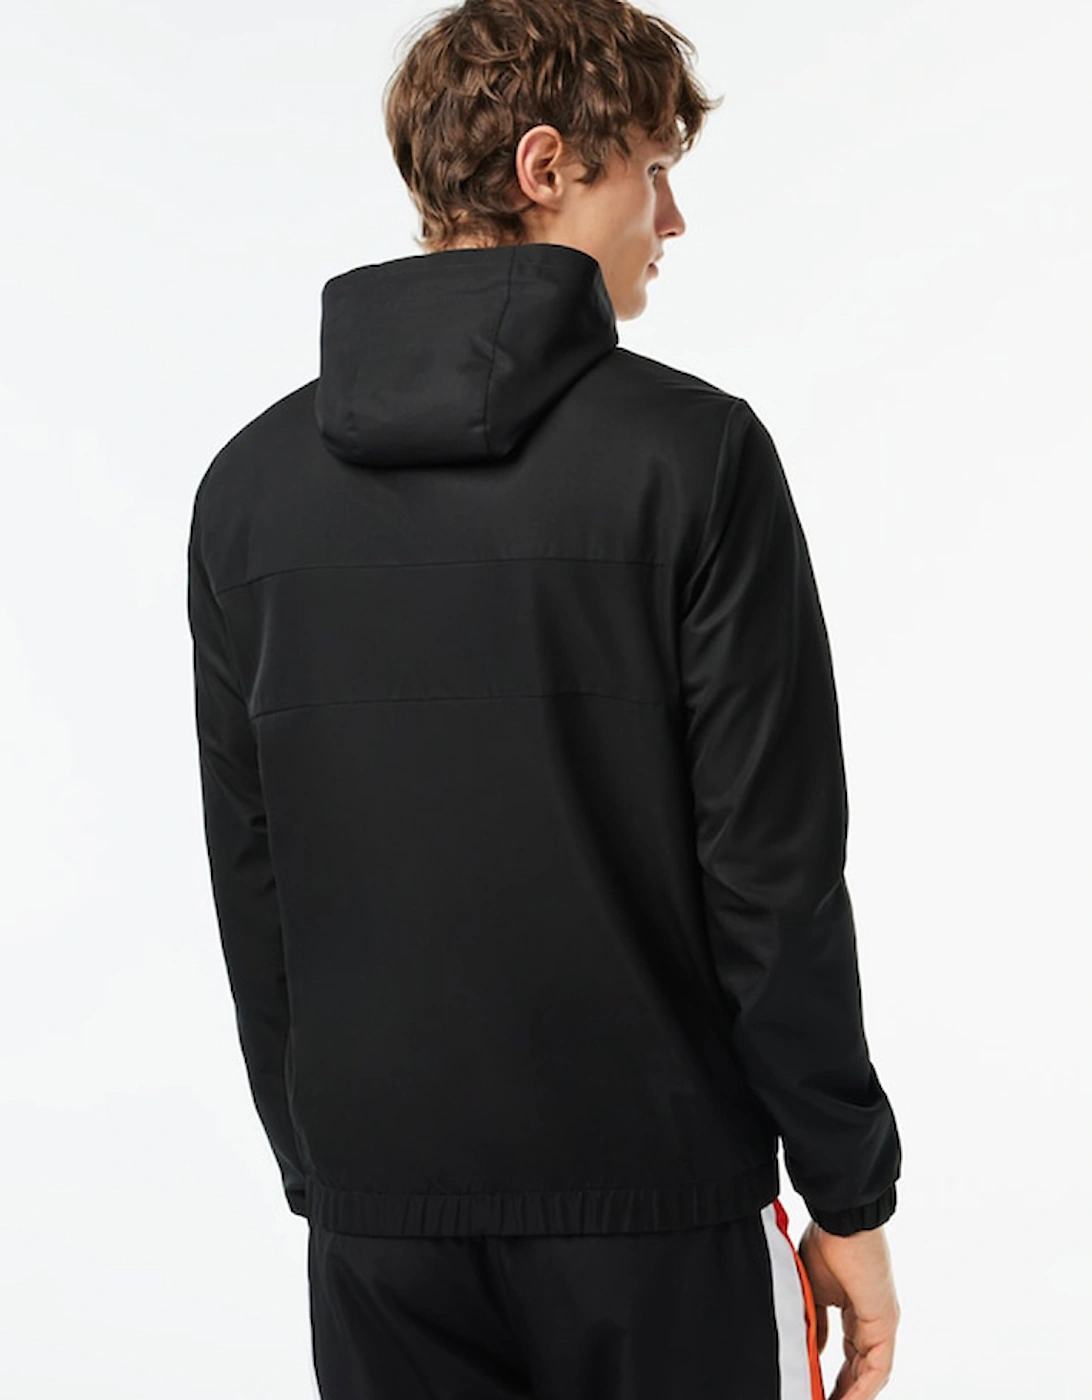 Men's Recycled Fiber Zipped Hooded Sport Jacket